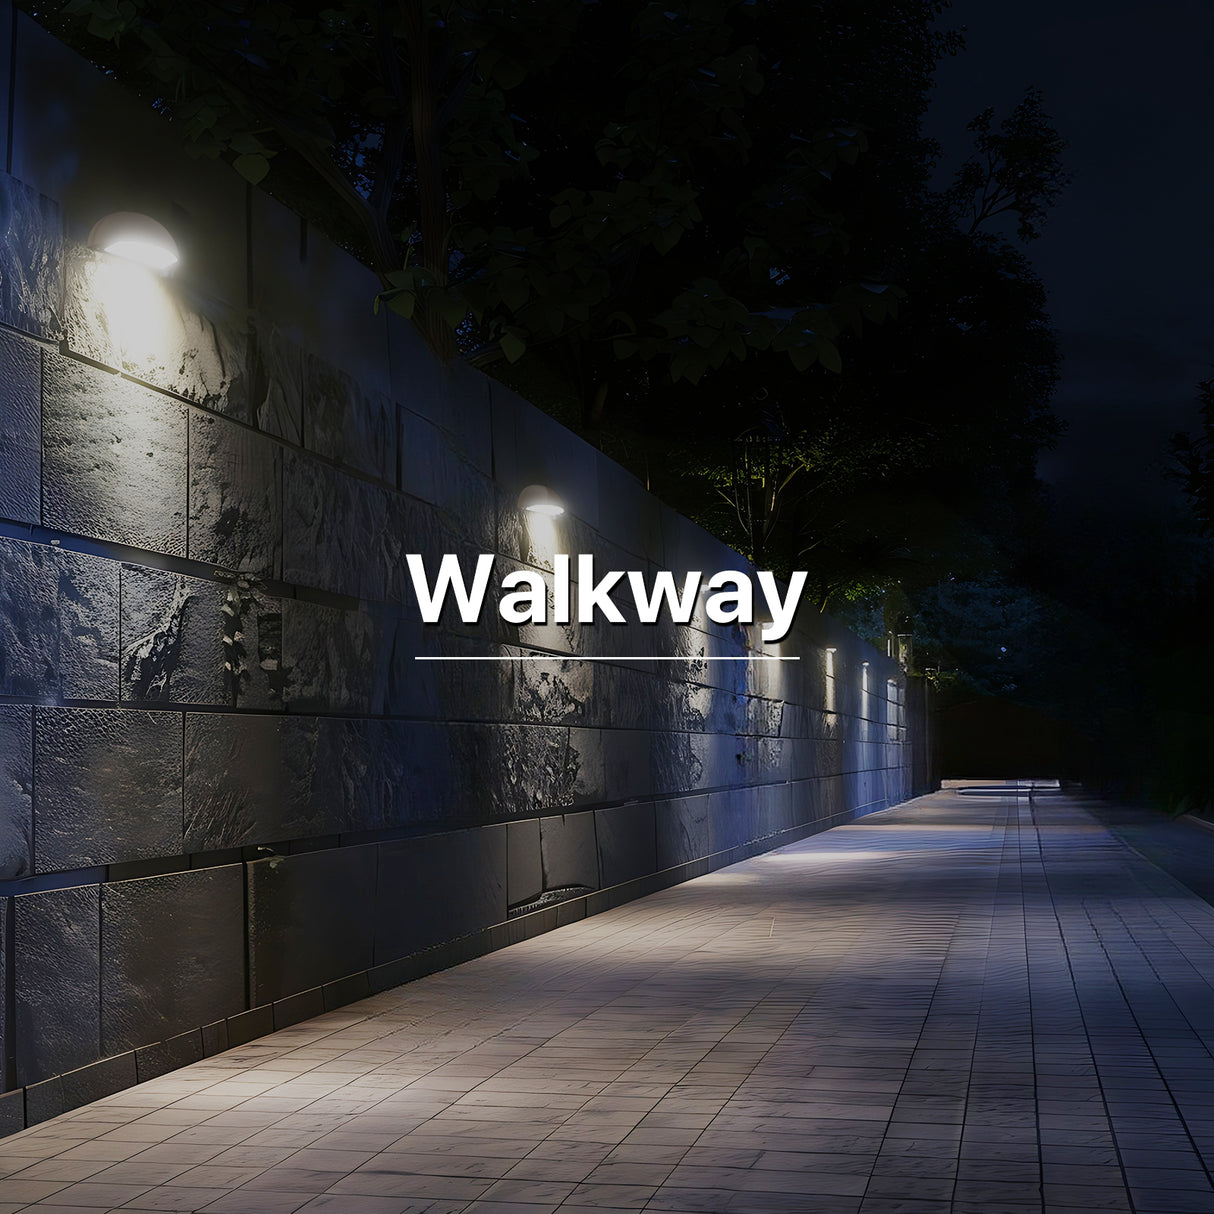 Outdoor wall lights light up the walkway.